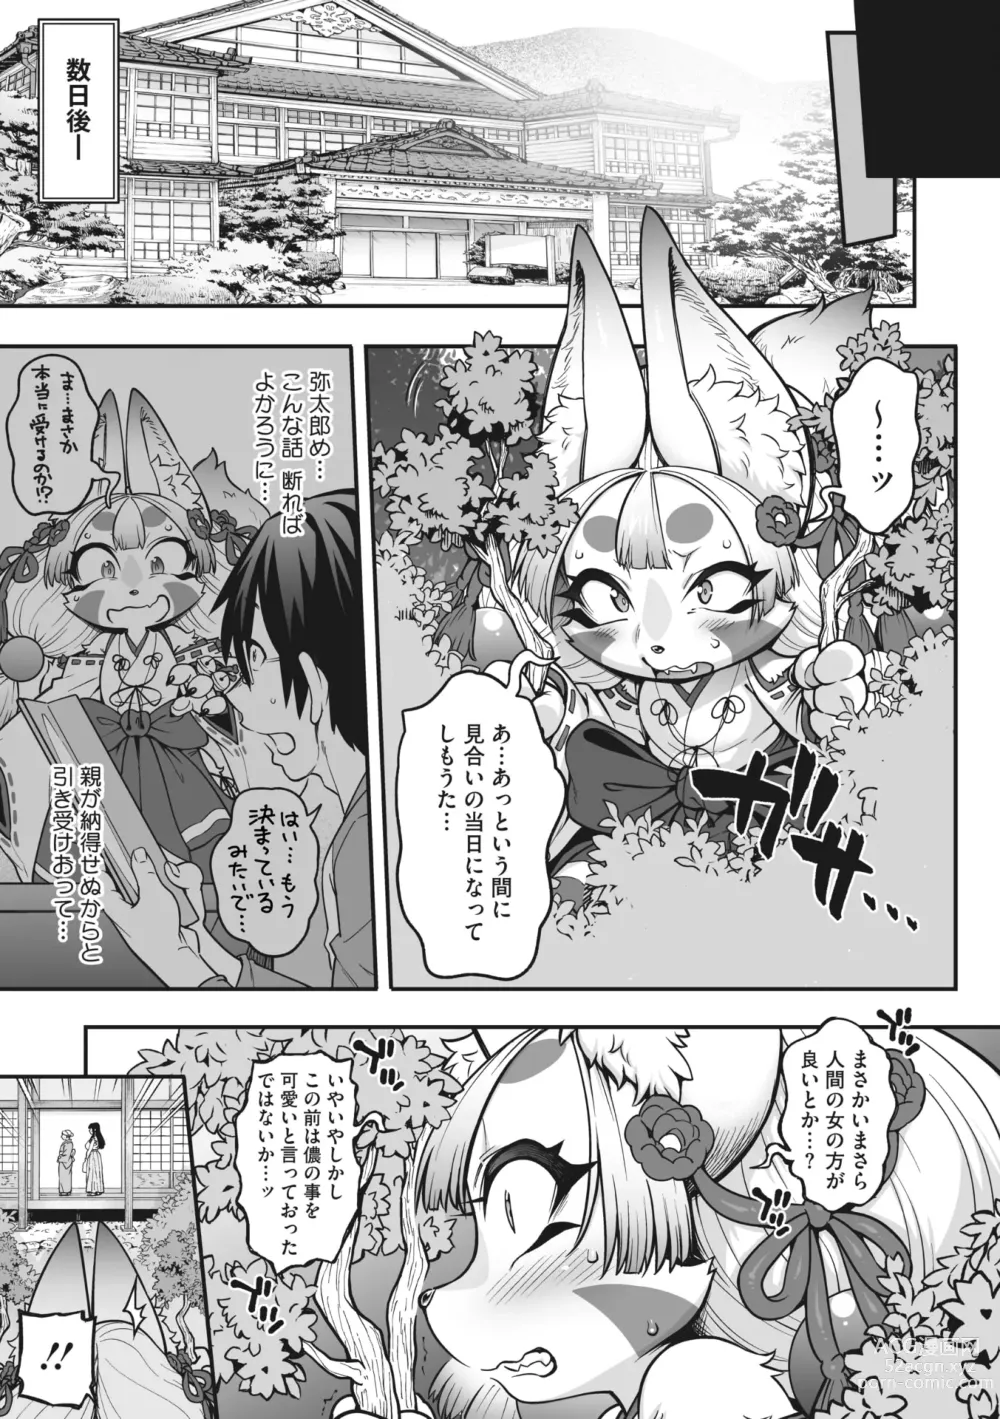 Page 5 of manga COMIC GAIRA Vol. 16